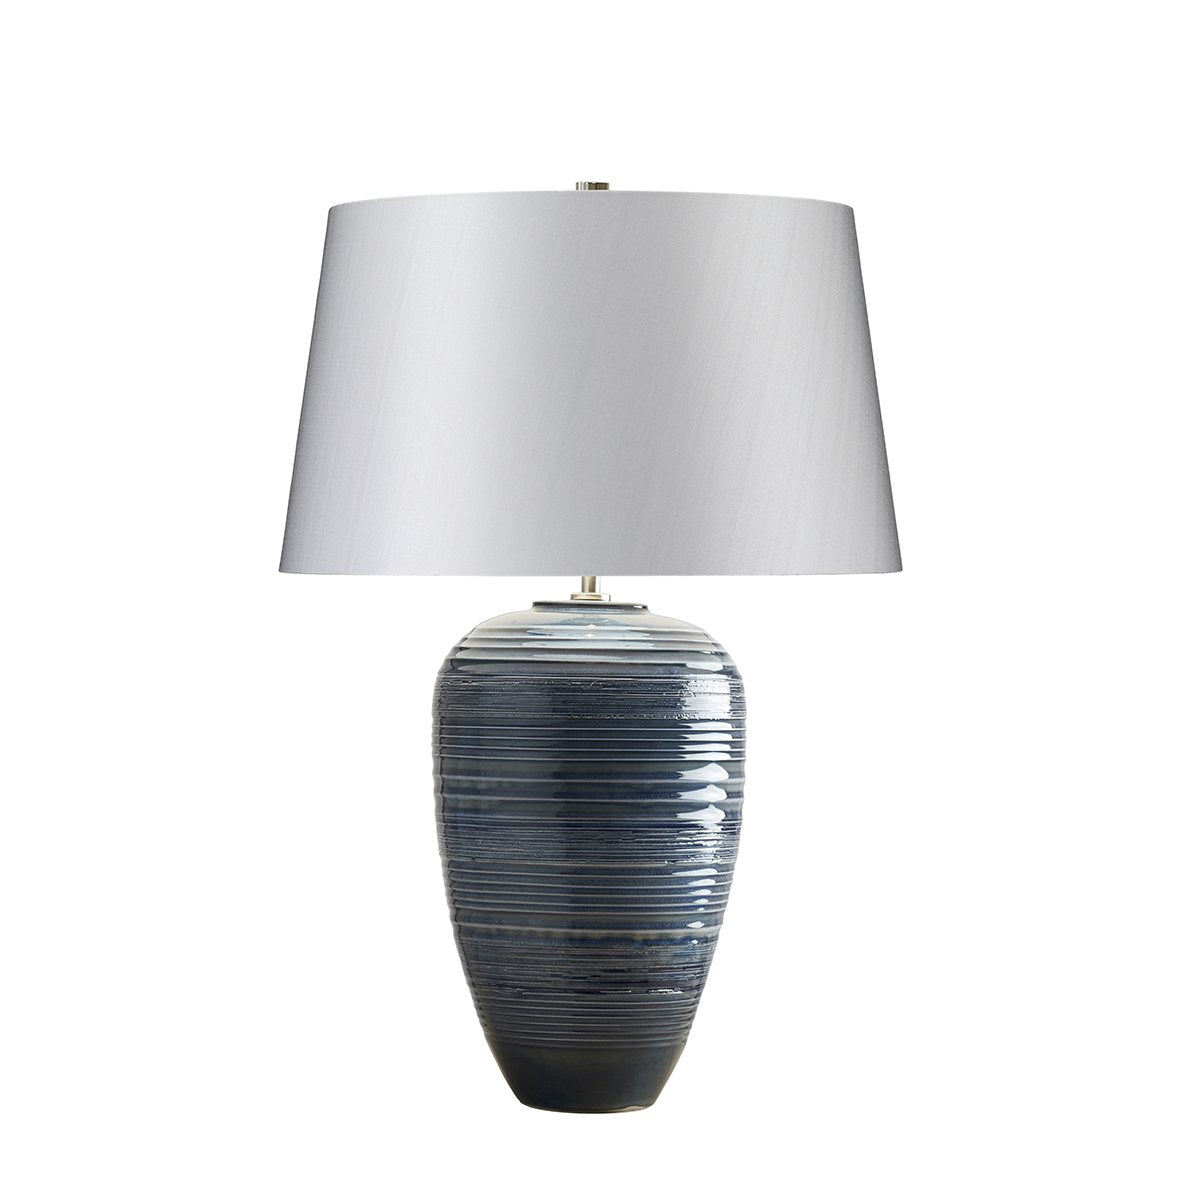 Pondersend Blue Ridged Table Lamp c/w Shade - ID 8387